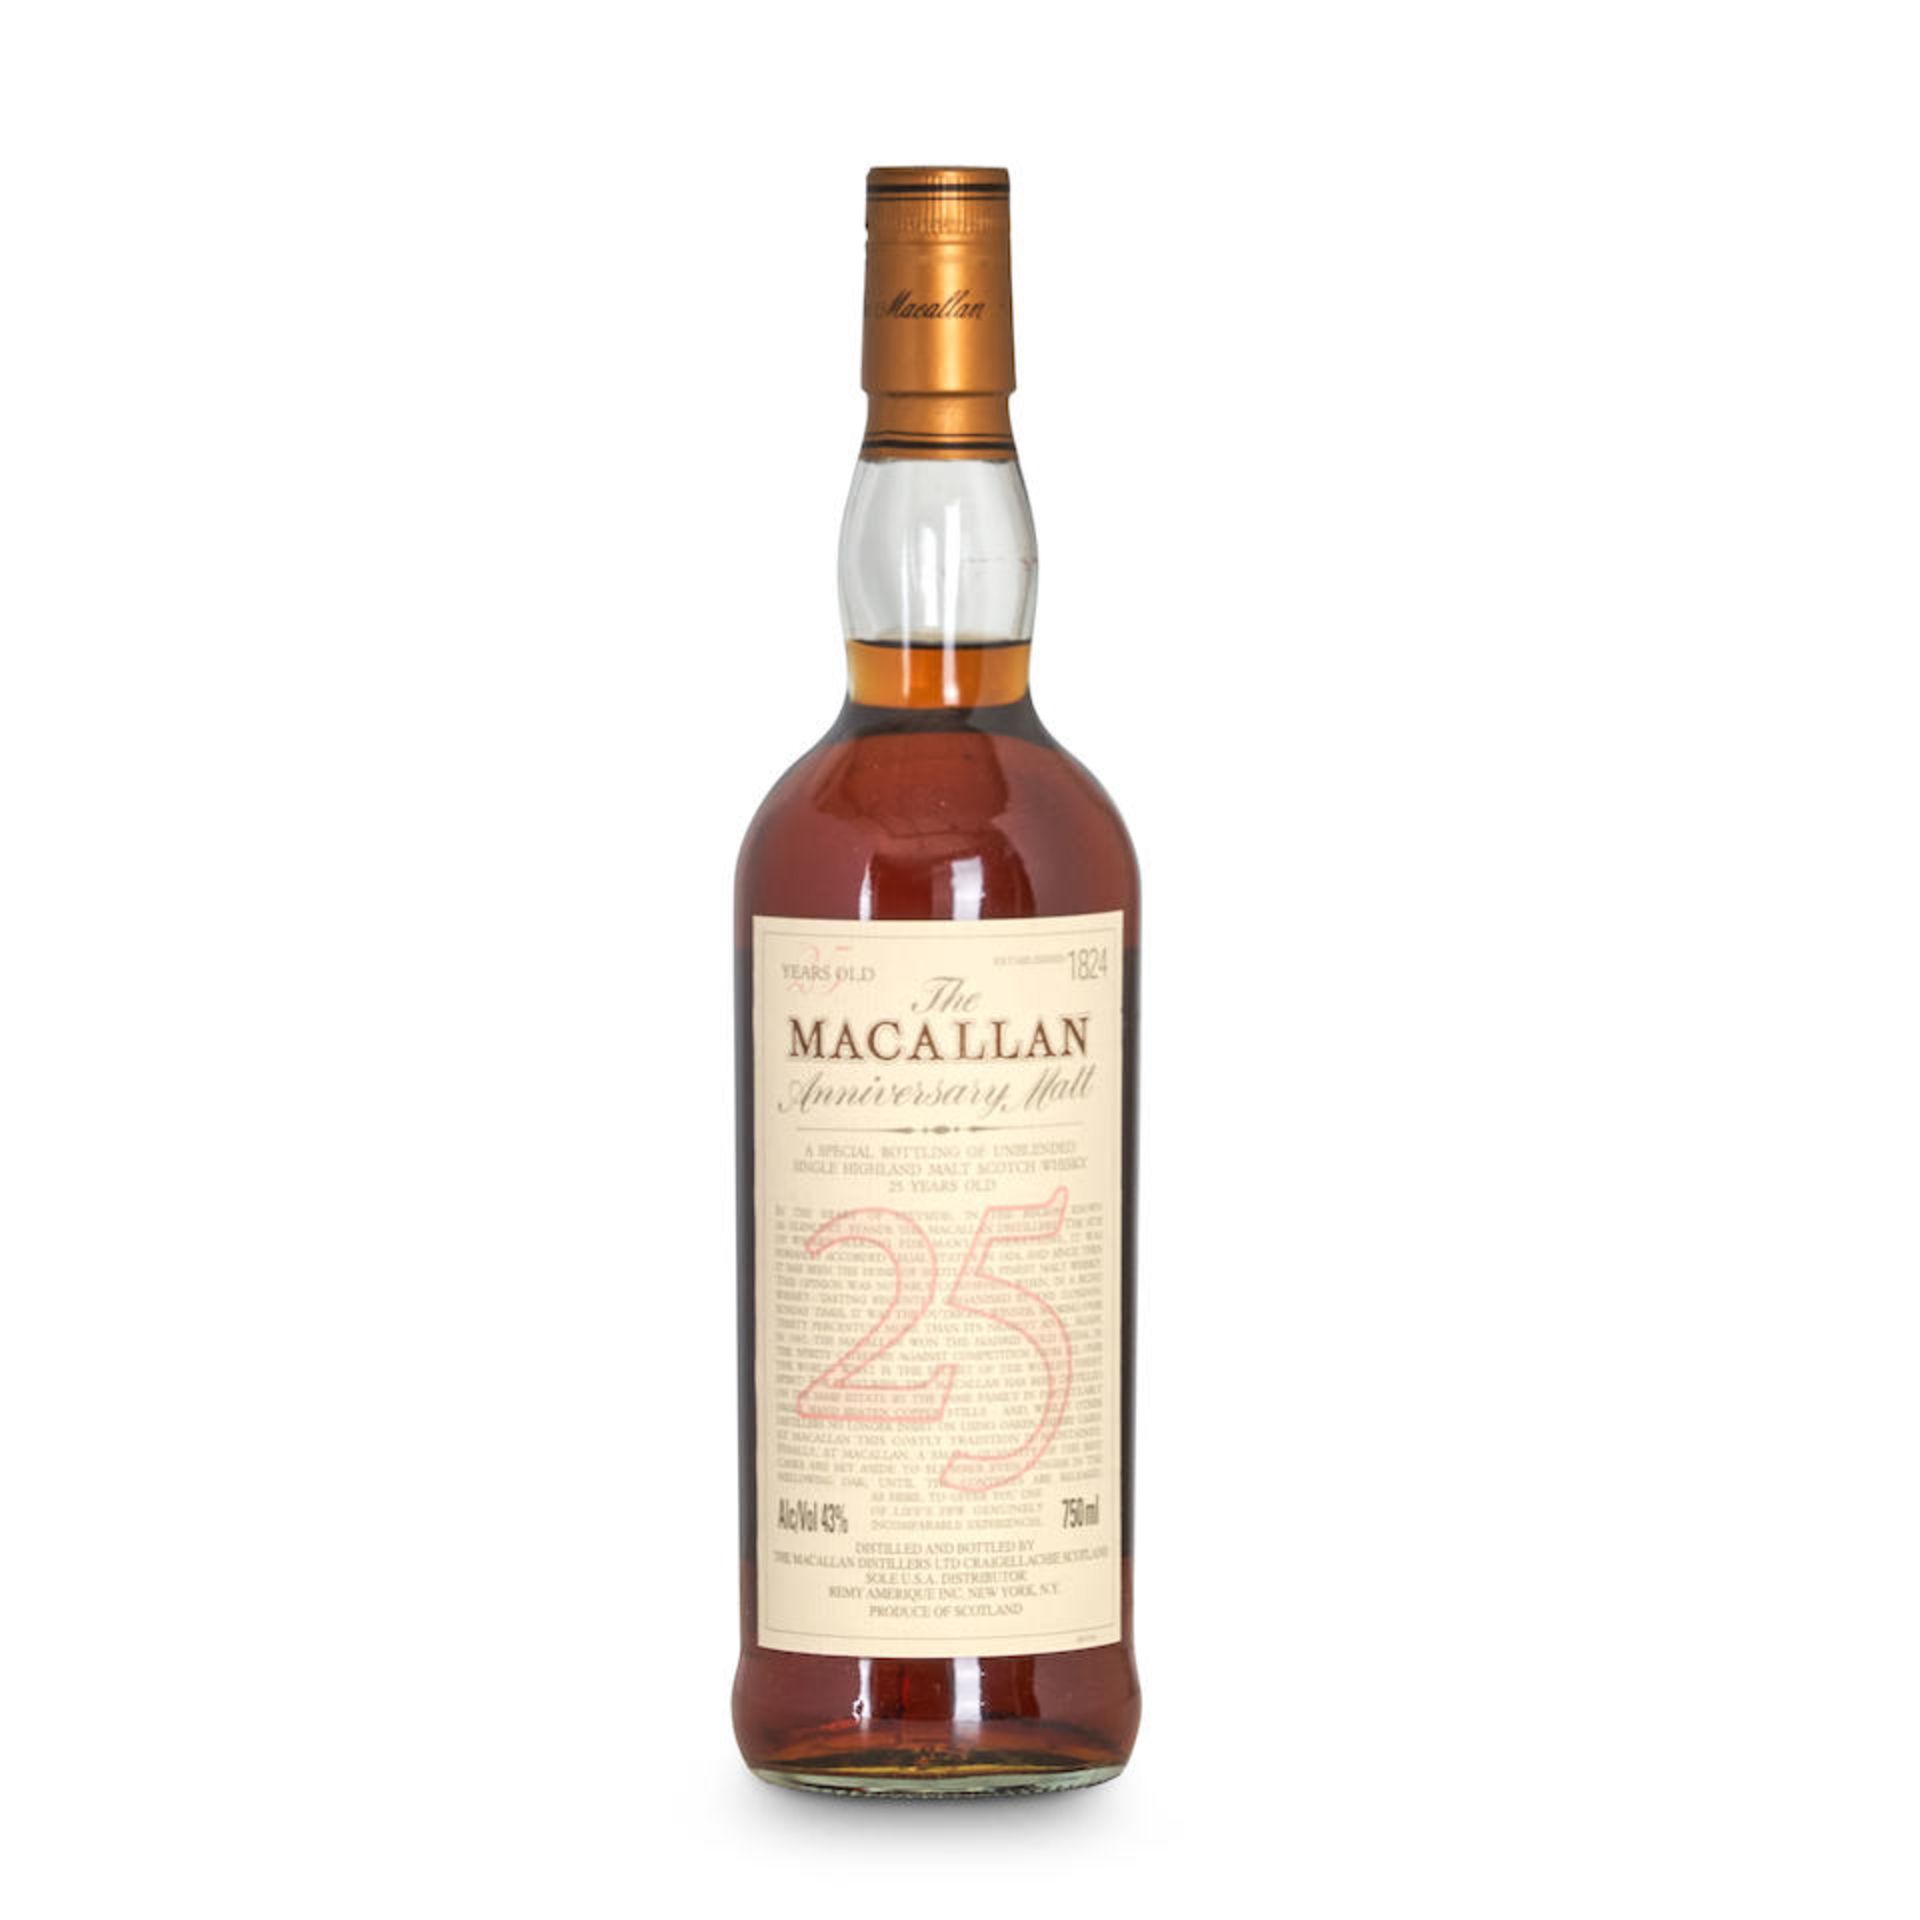 Macallan Anniversary Malt 25 Years Old (1 750ml bottle)